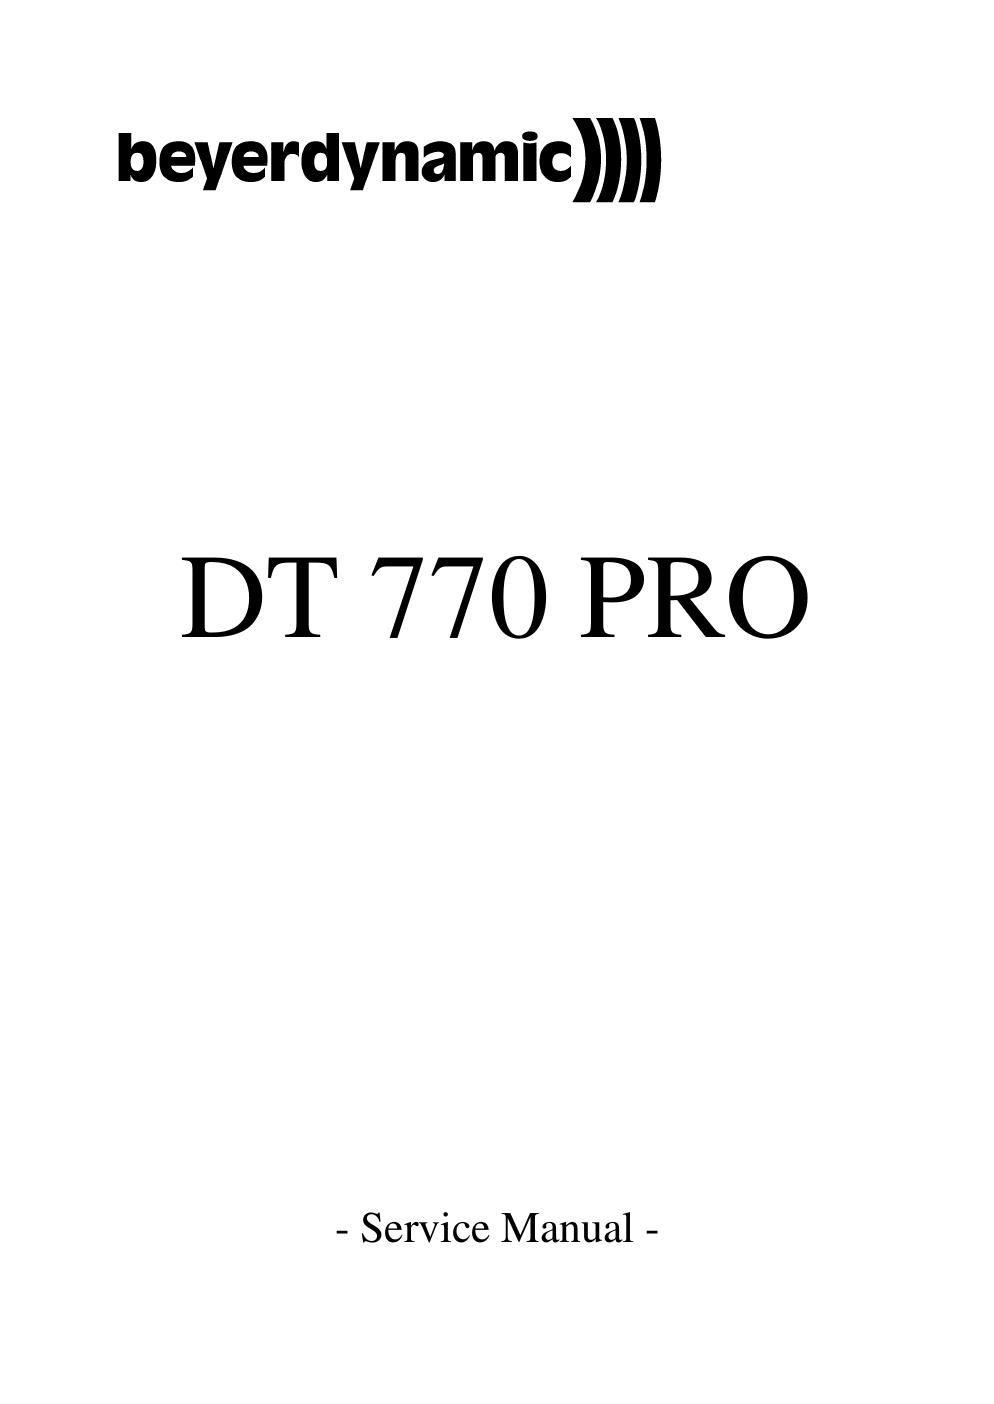 beyerdynamic dt 770 pro service manual